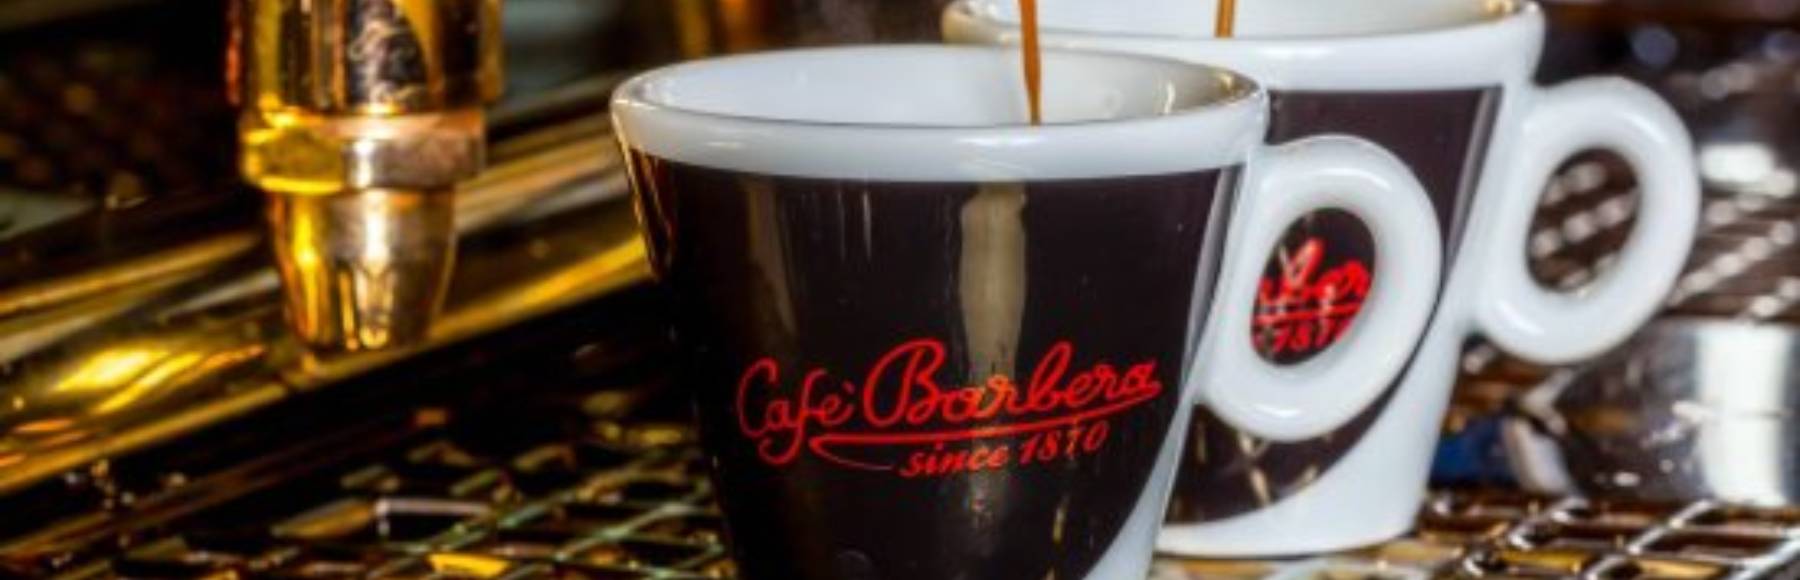 Café Barbera